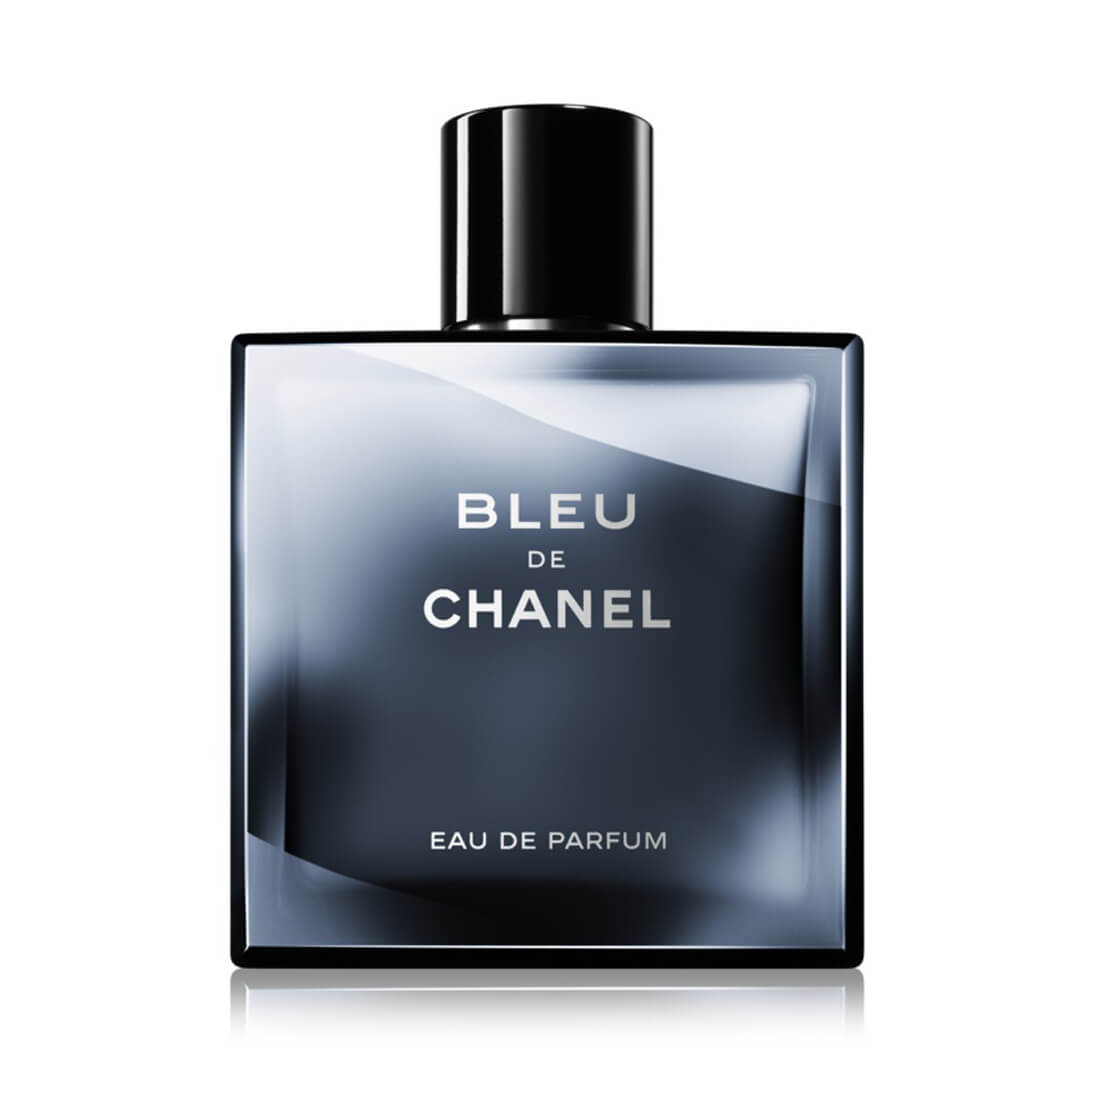 Chanel Bleu De Chanel Eau de Parfum Spray, Cologne for Men, 5 Oz 